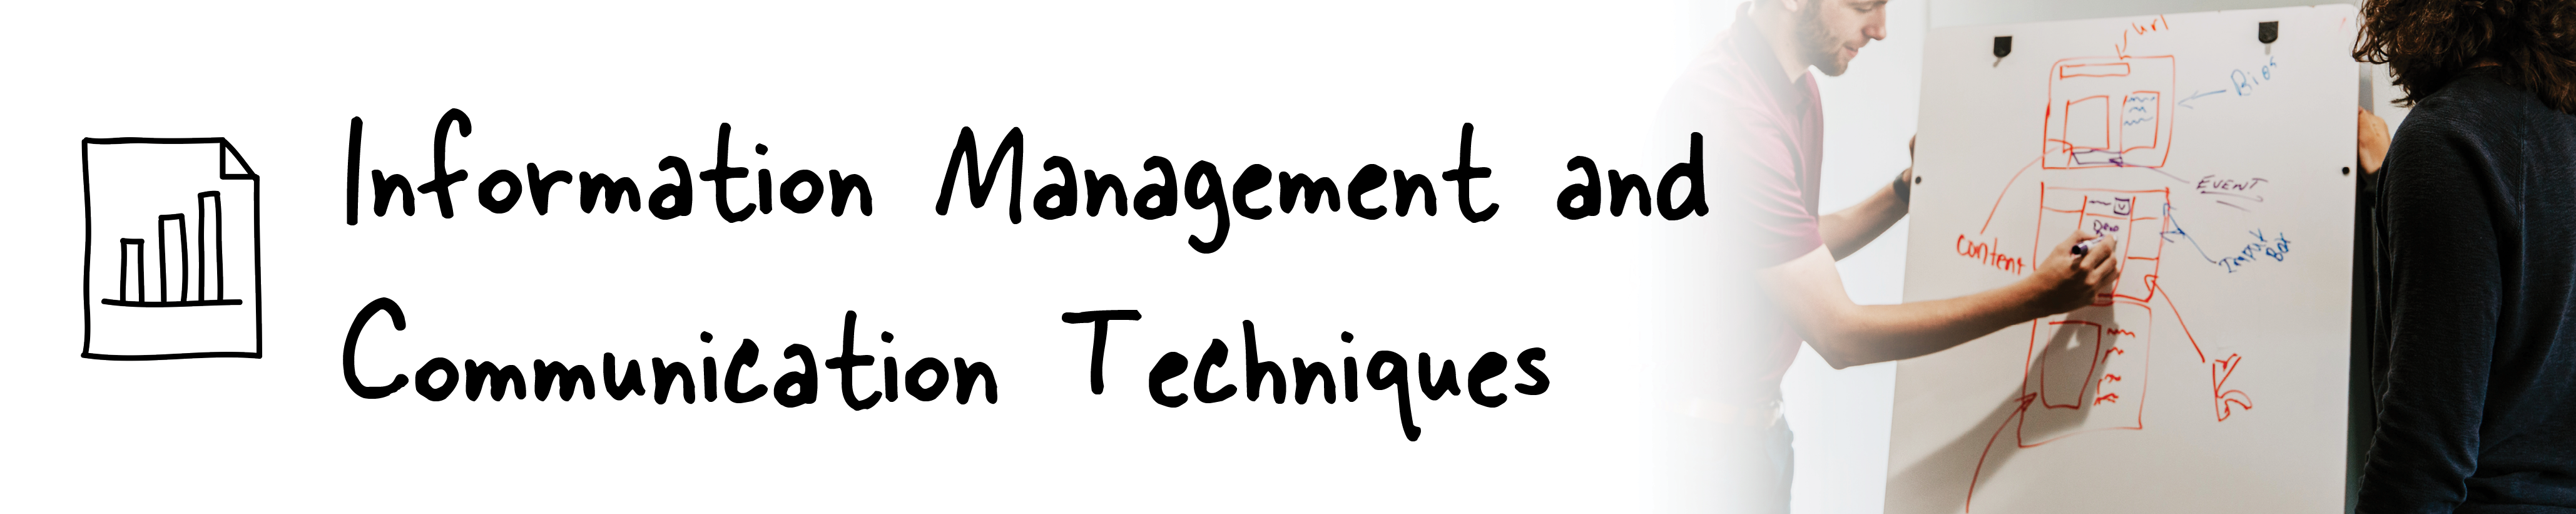 Information Management and Communication Techniques